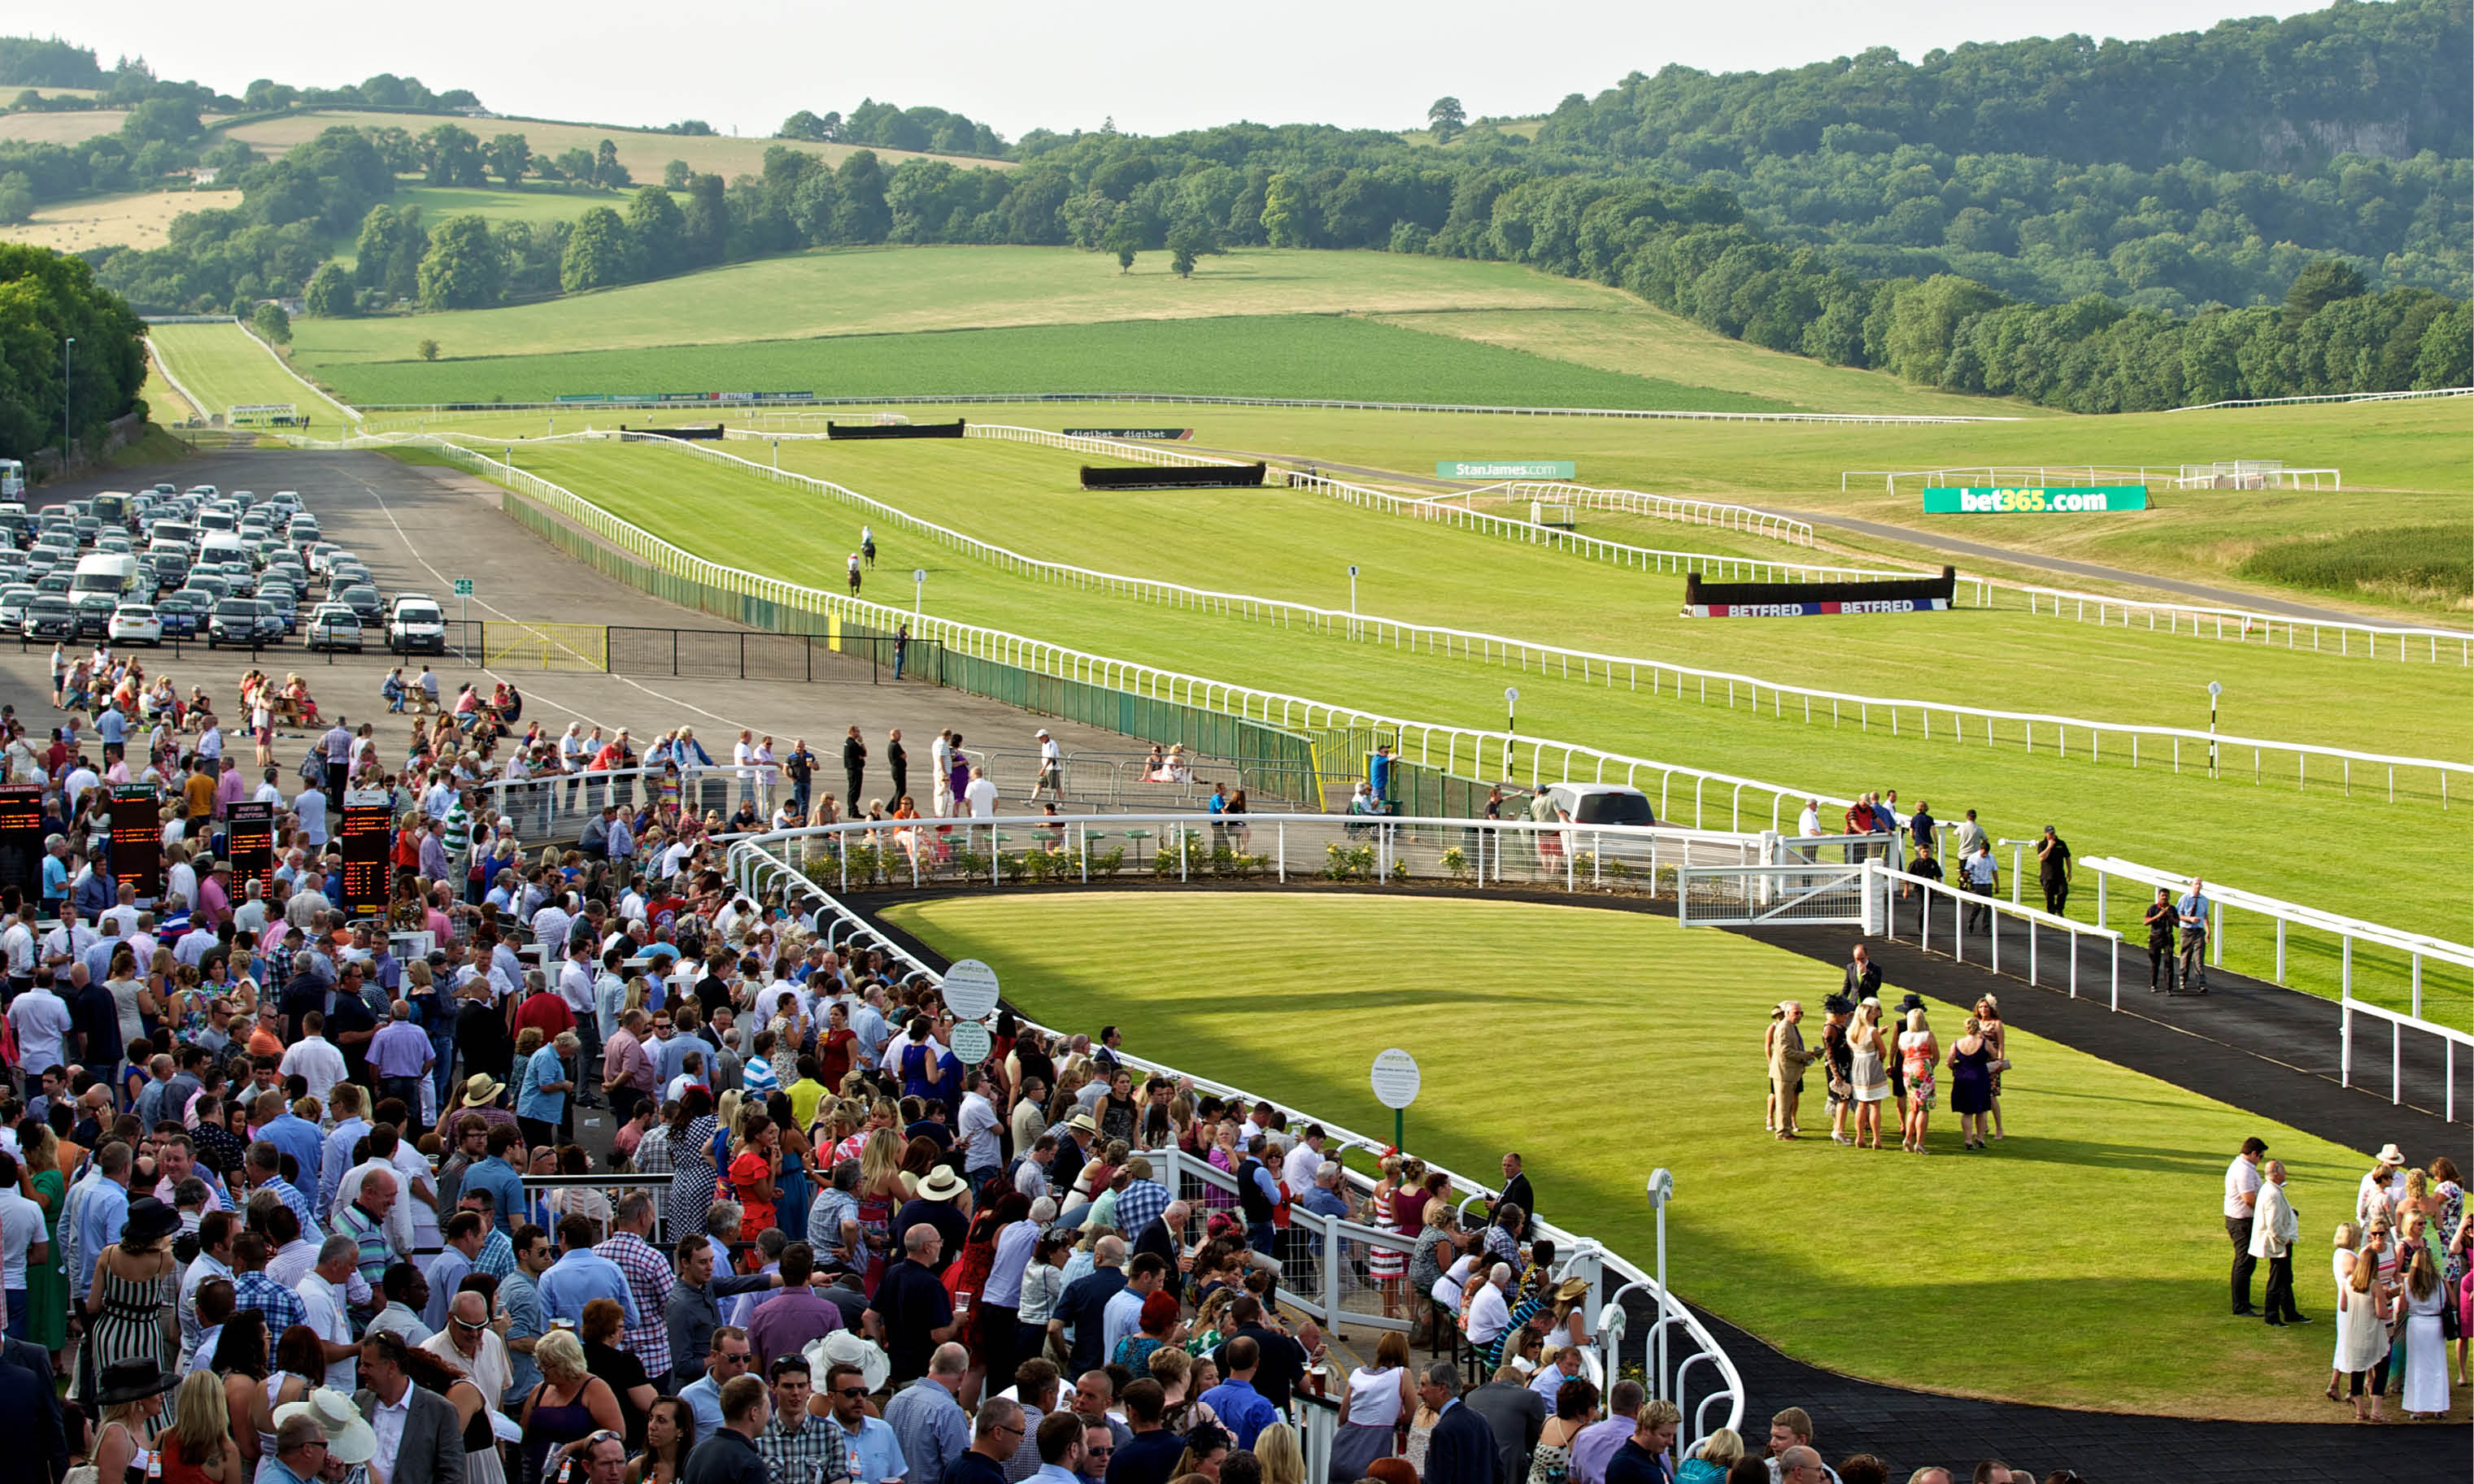 Chepstow Racecourse Fixture - The British Horseracing Authority